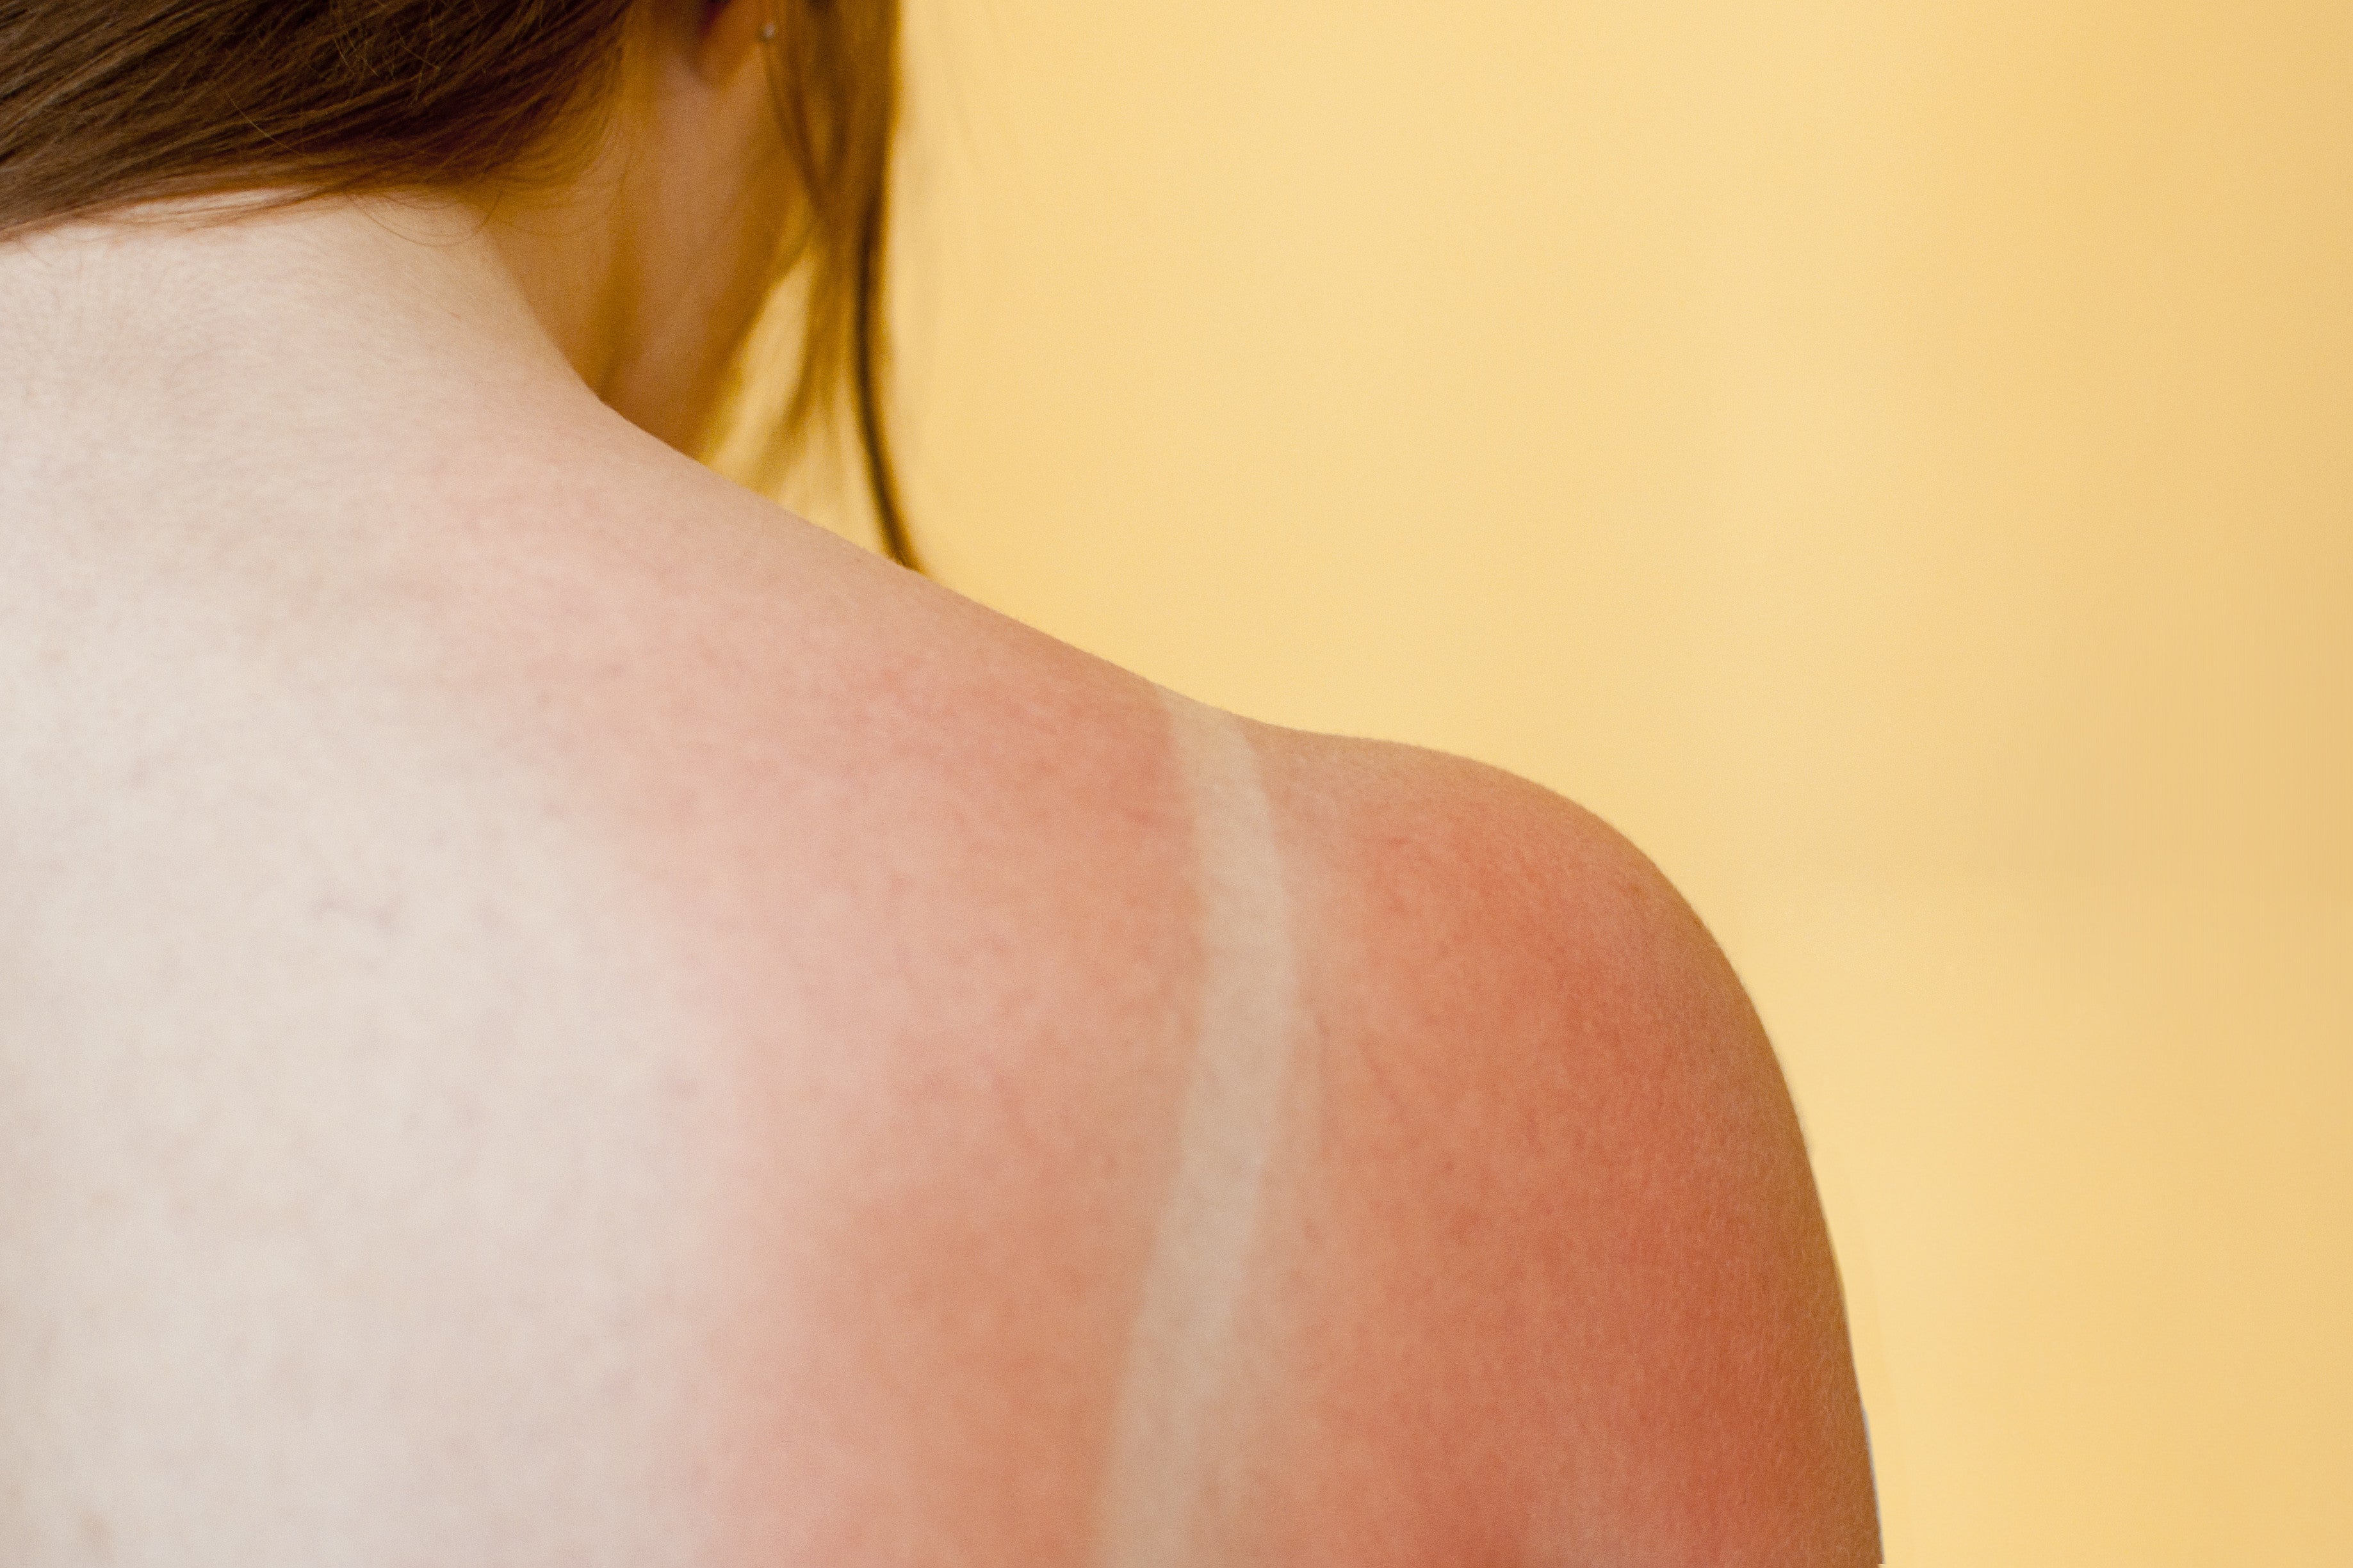 Brush On Block image of sun burn lined bathing suit on shoulders